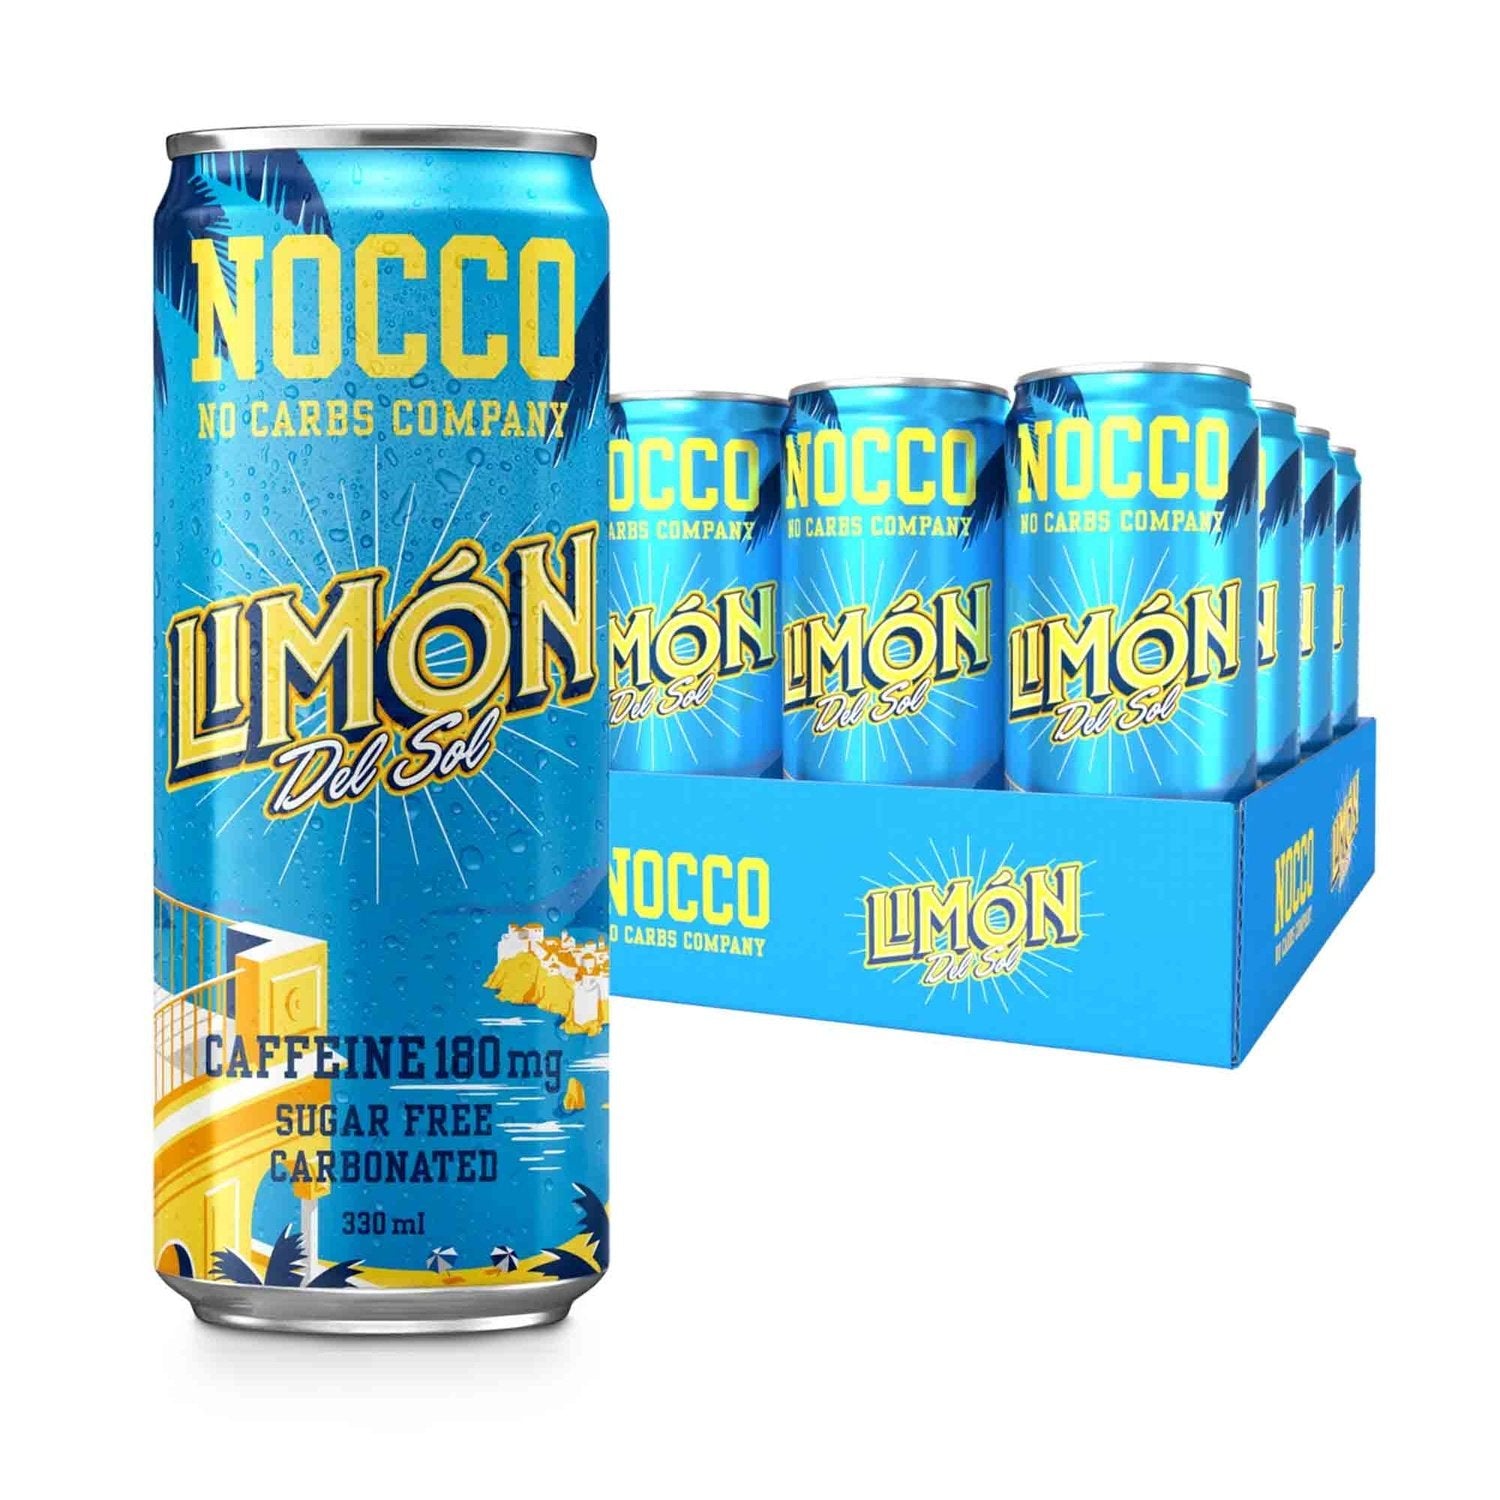 NOCCO NOCCO Energiedrink BCAA 12 x 330 ml Limon kaufen bei HighPowered.ch